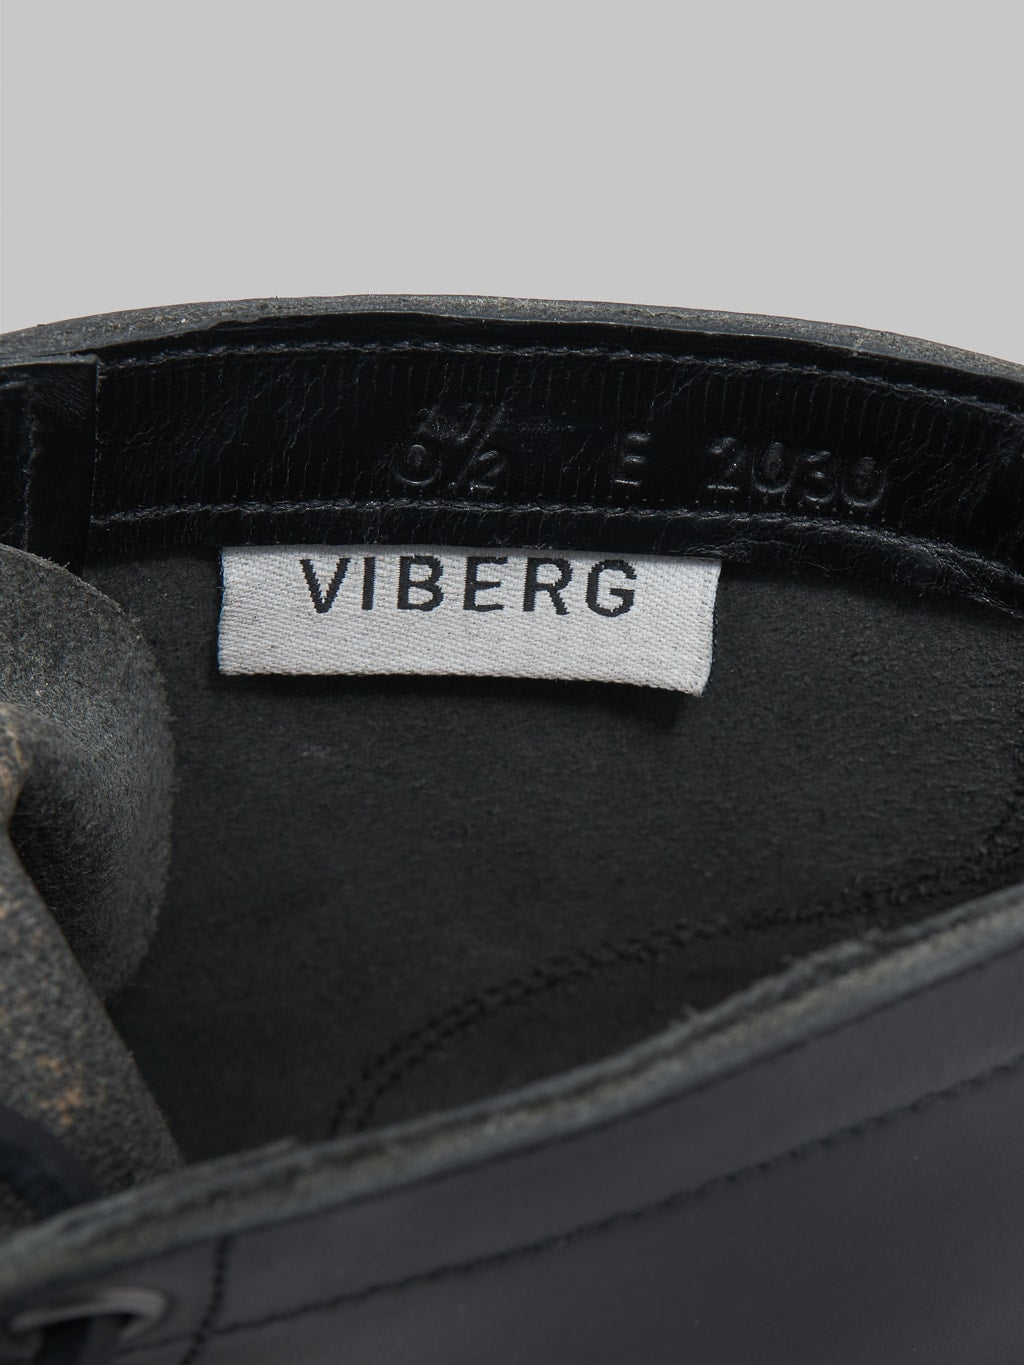 Viberg Service Boot 2030 Black Chromexcel interior tag